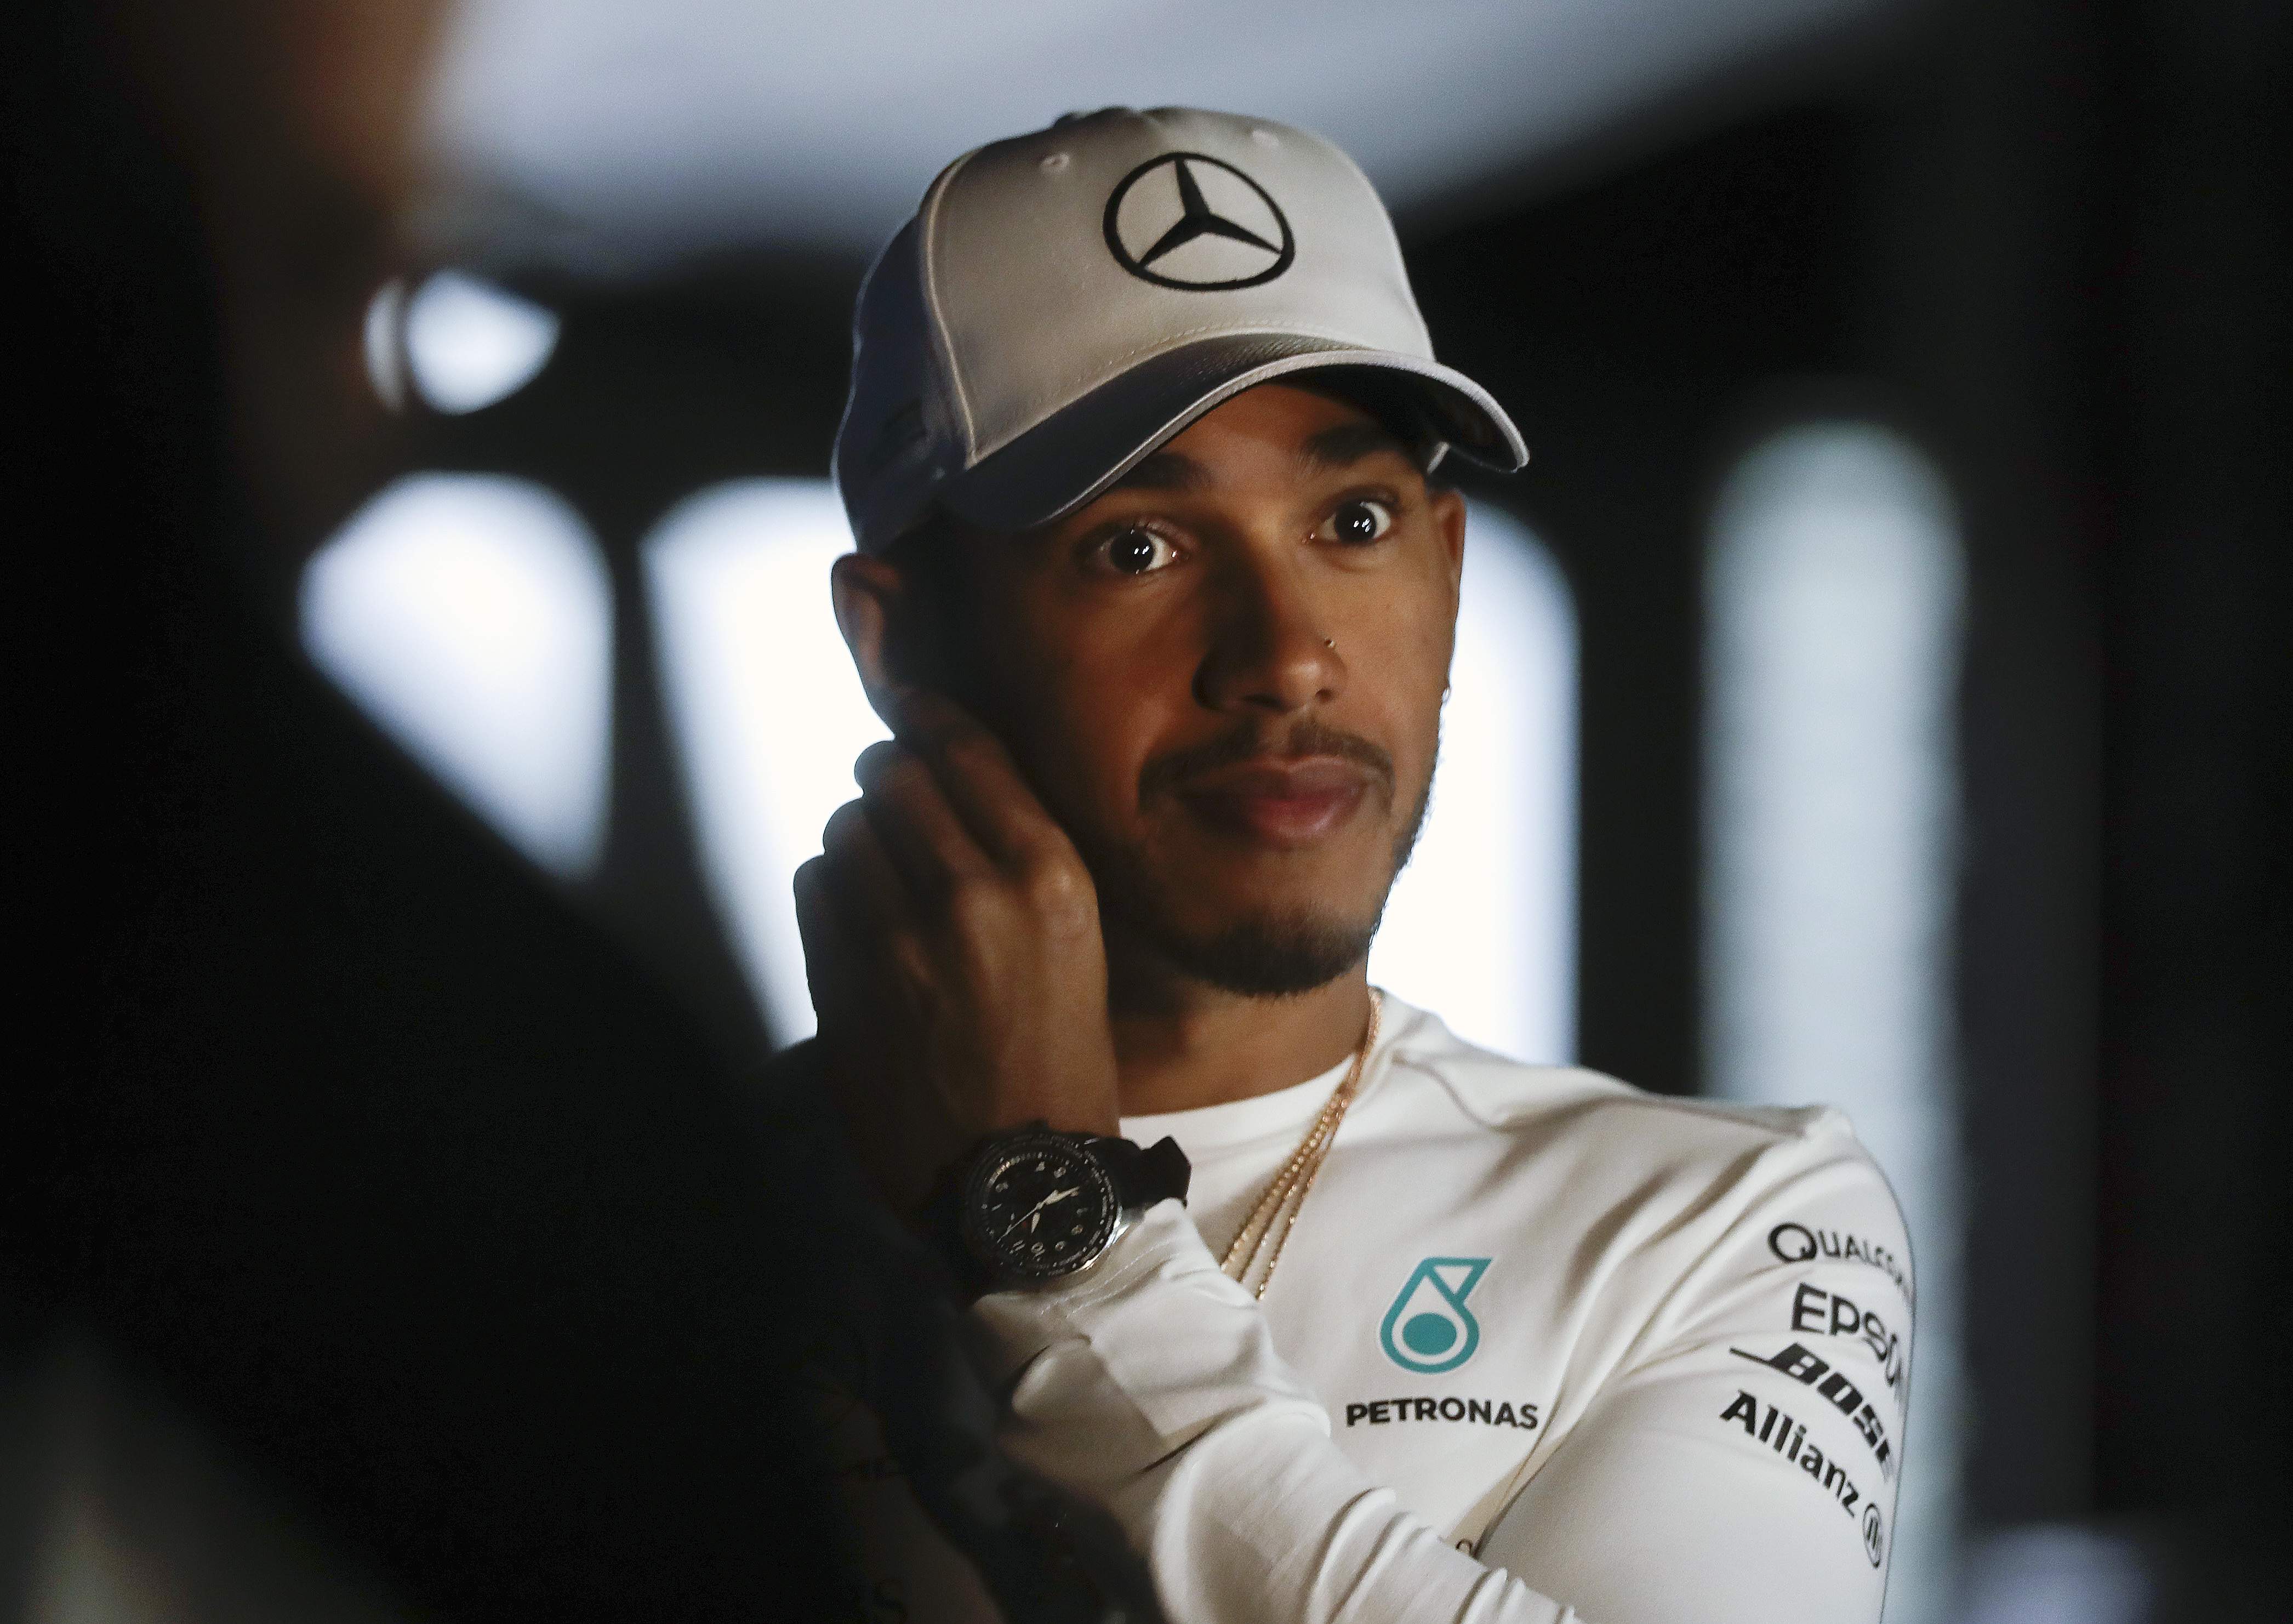 Motorsports: Hamilton at the top in Abu Dhabi Grand Prix Practice